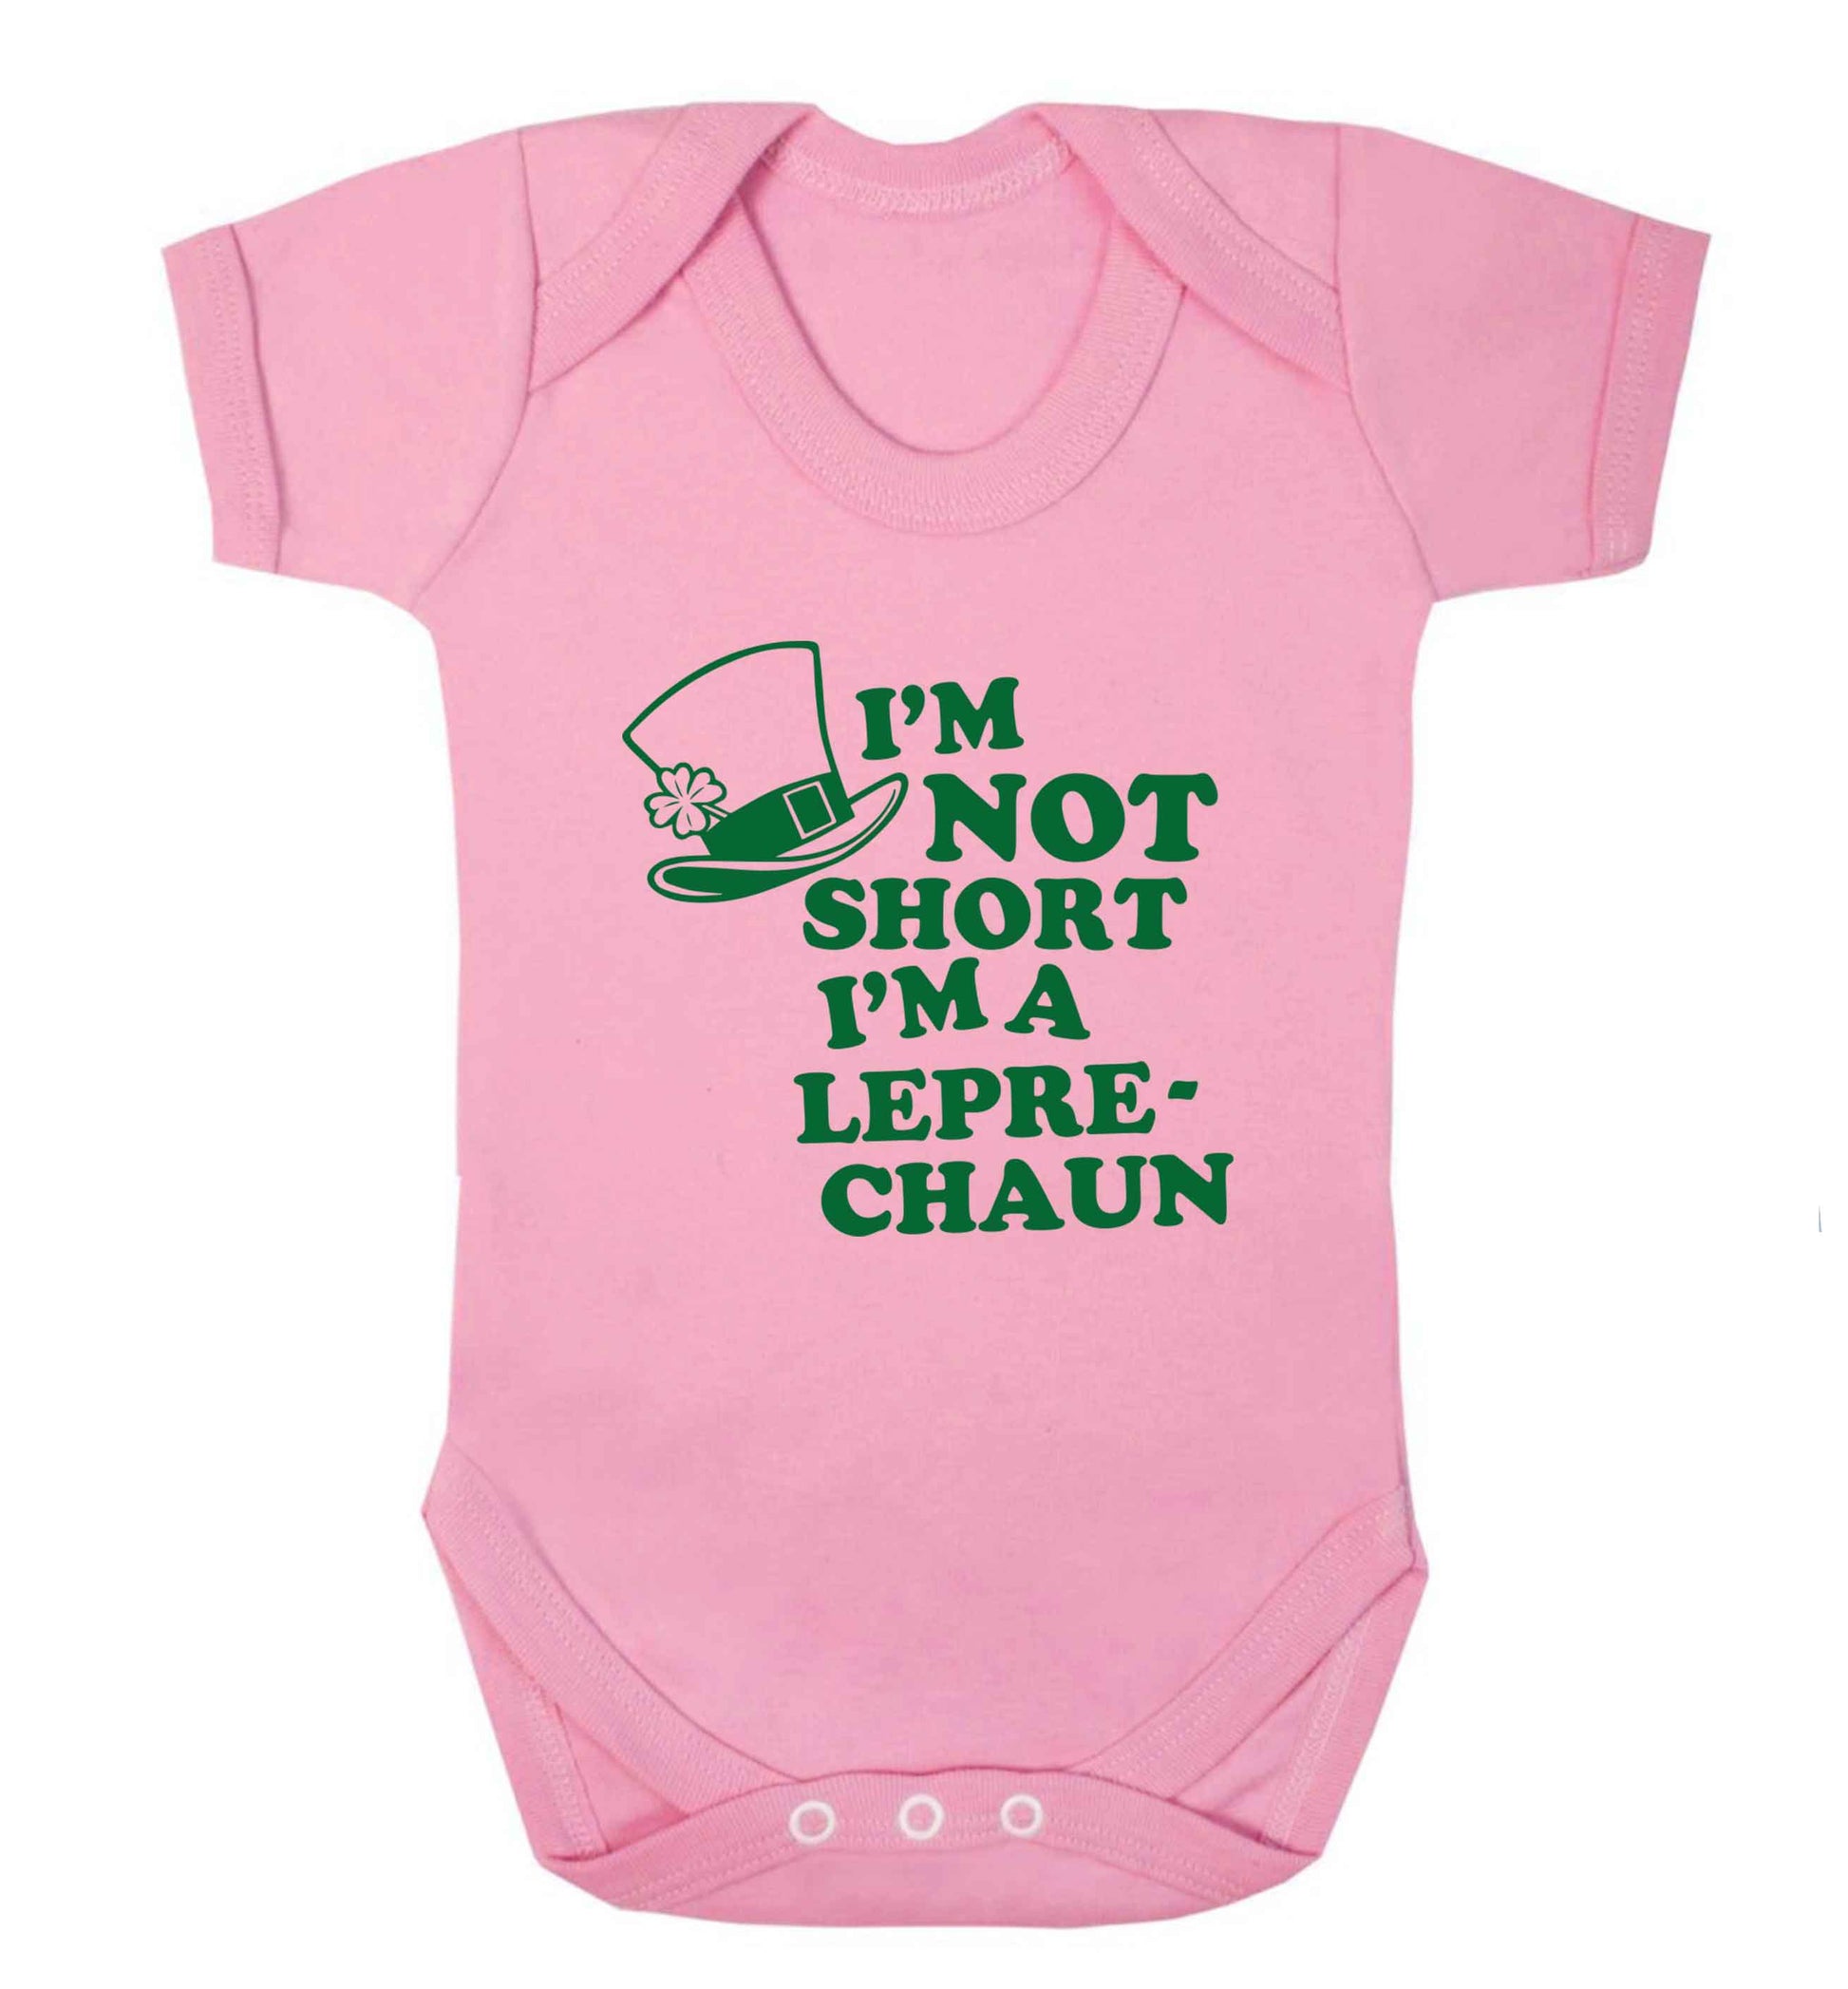 I'm not short I'm a leprechaun baby vest pale pink 18-24 months